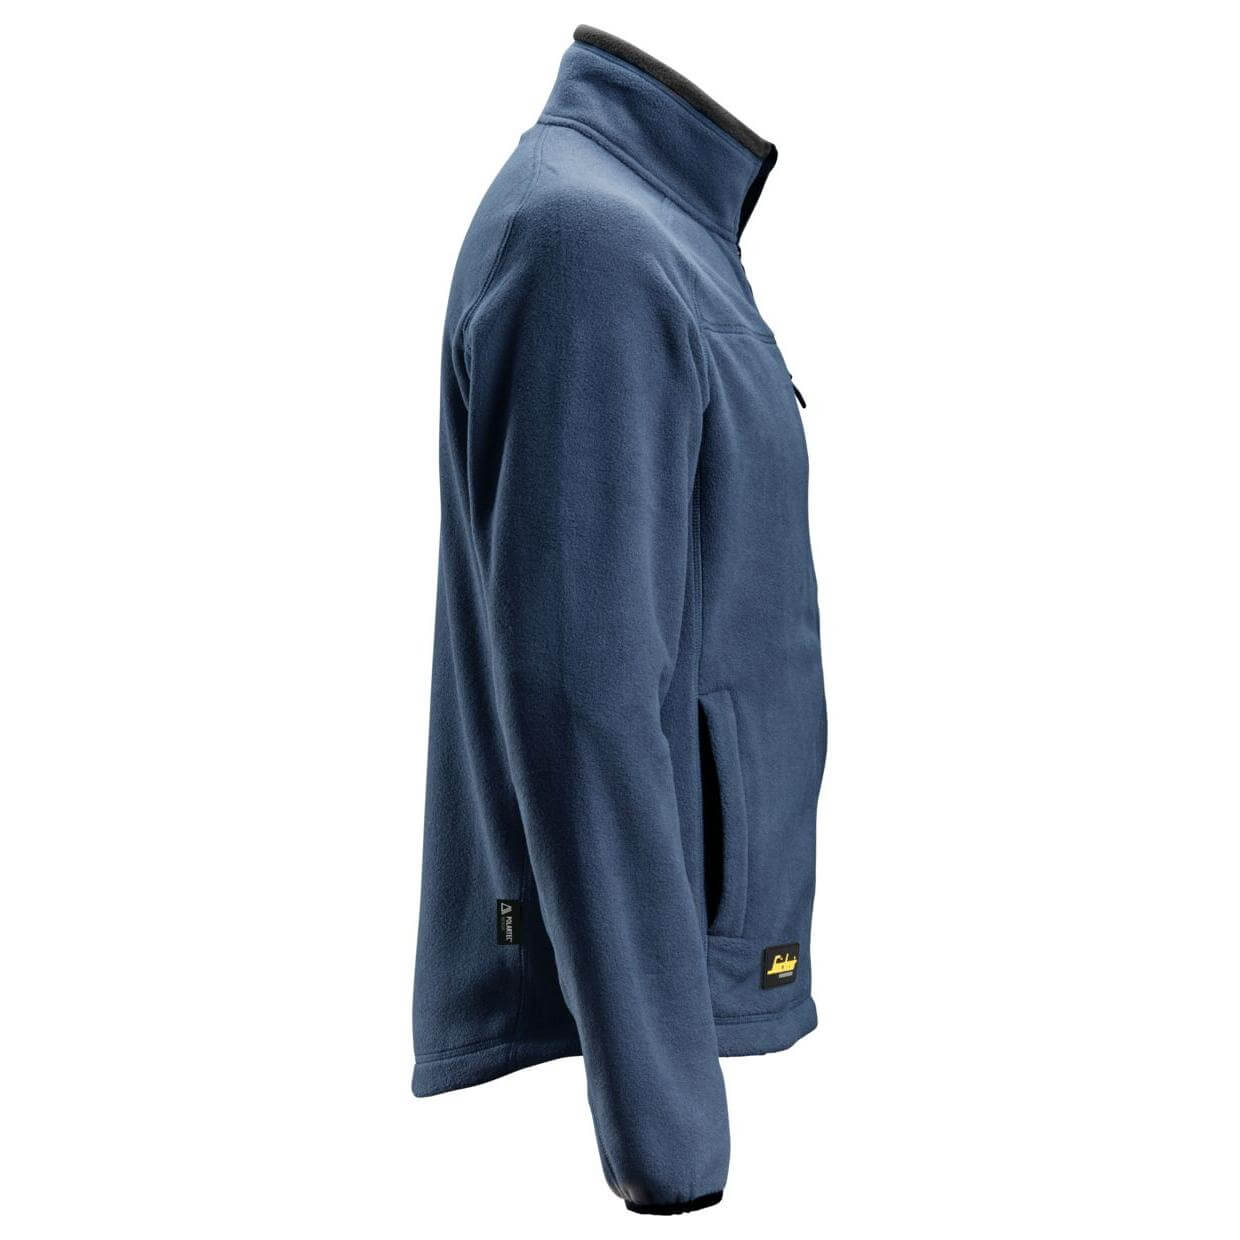 Snickers 8022 AllroundWork Warm Lightweight Fleece Jacket